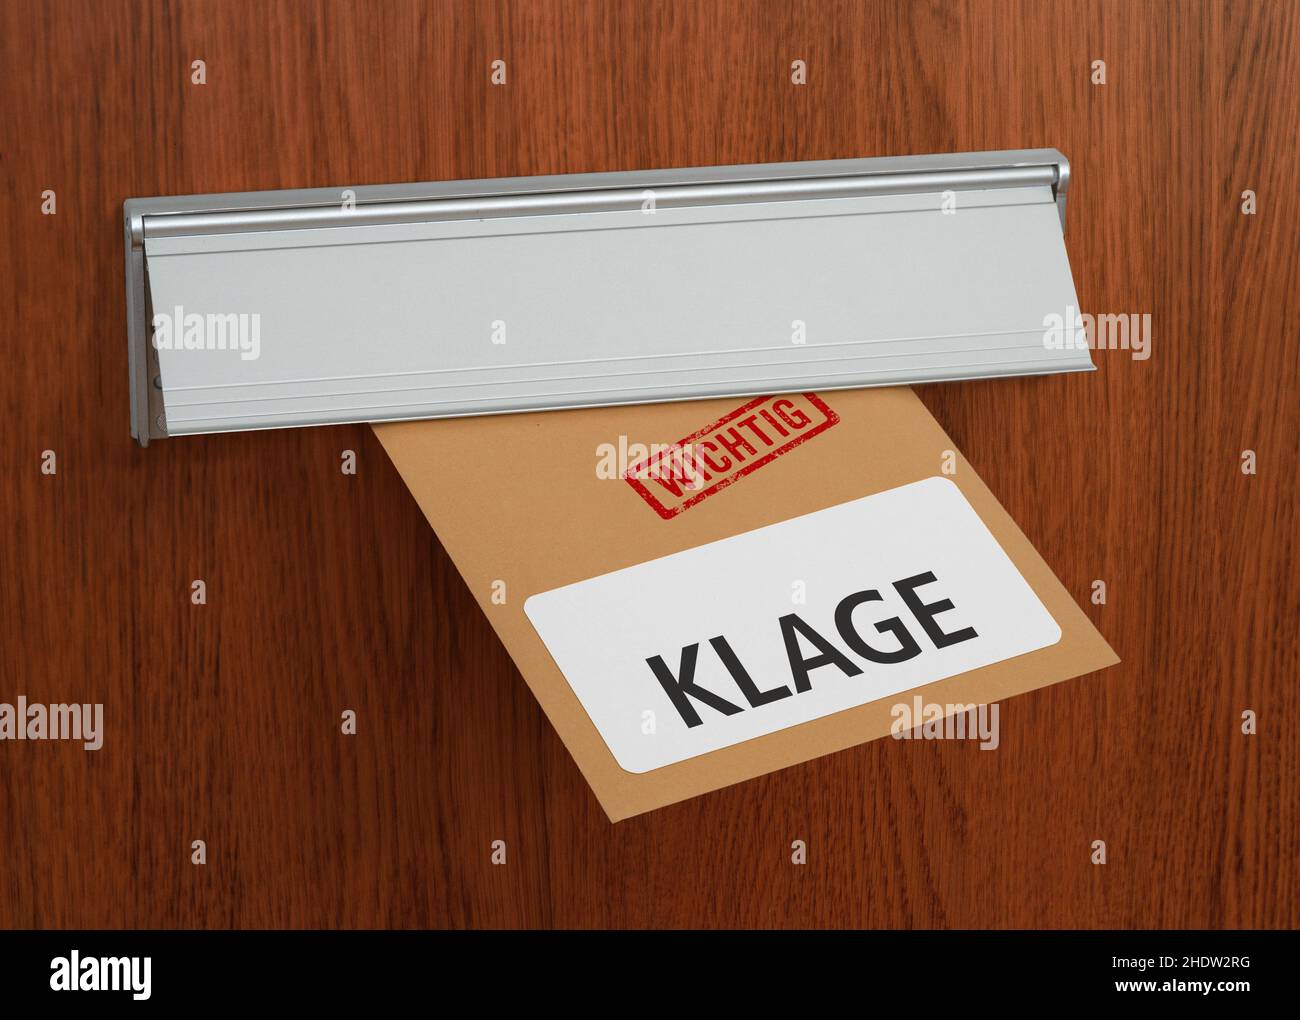 mail, klage, mails Stock Photo